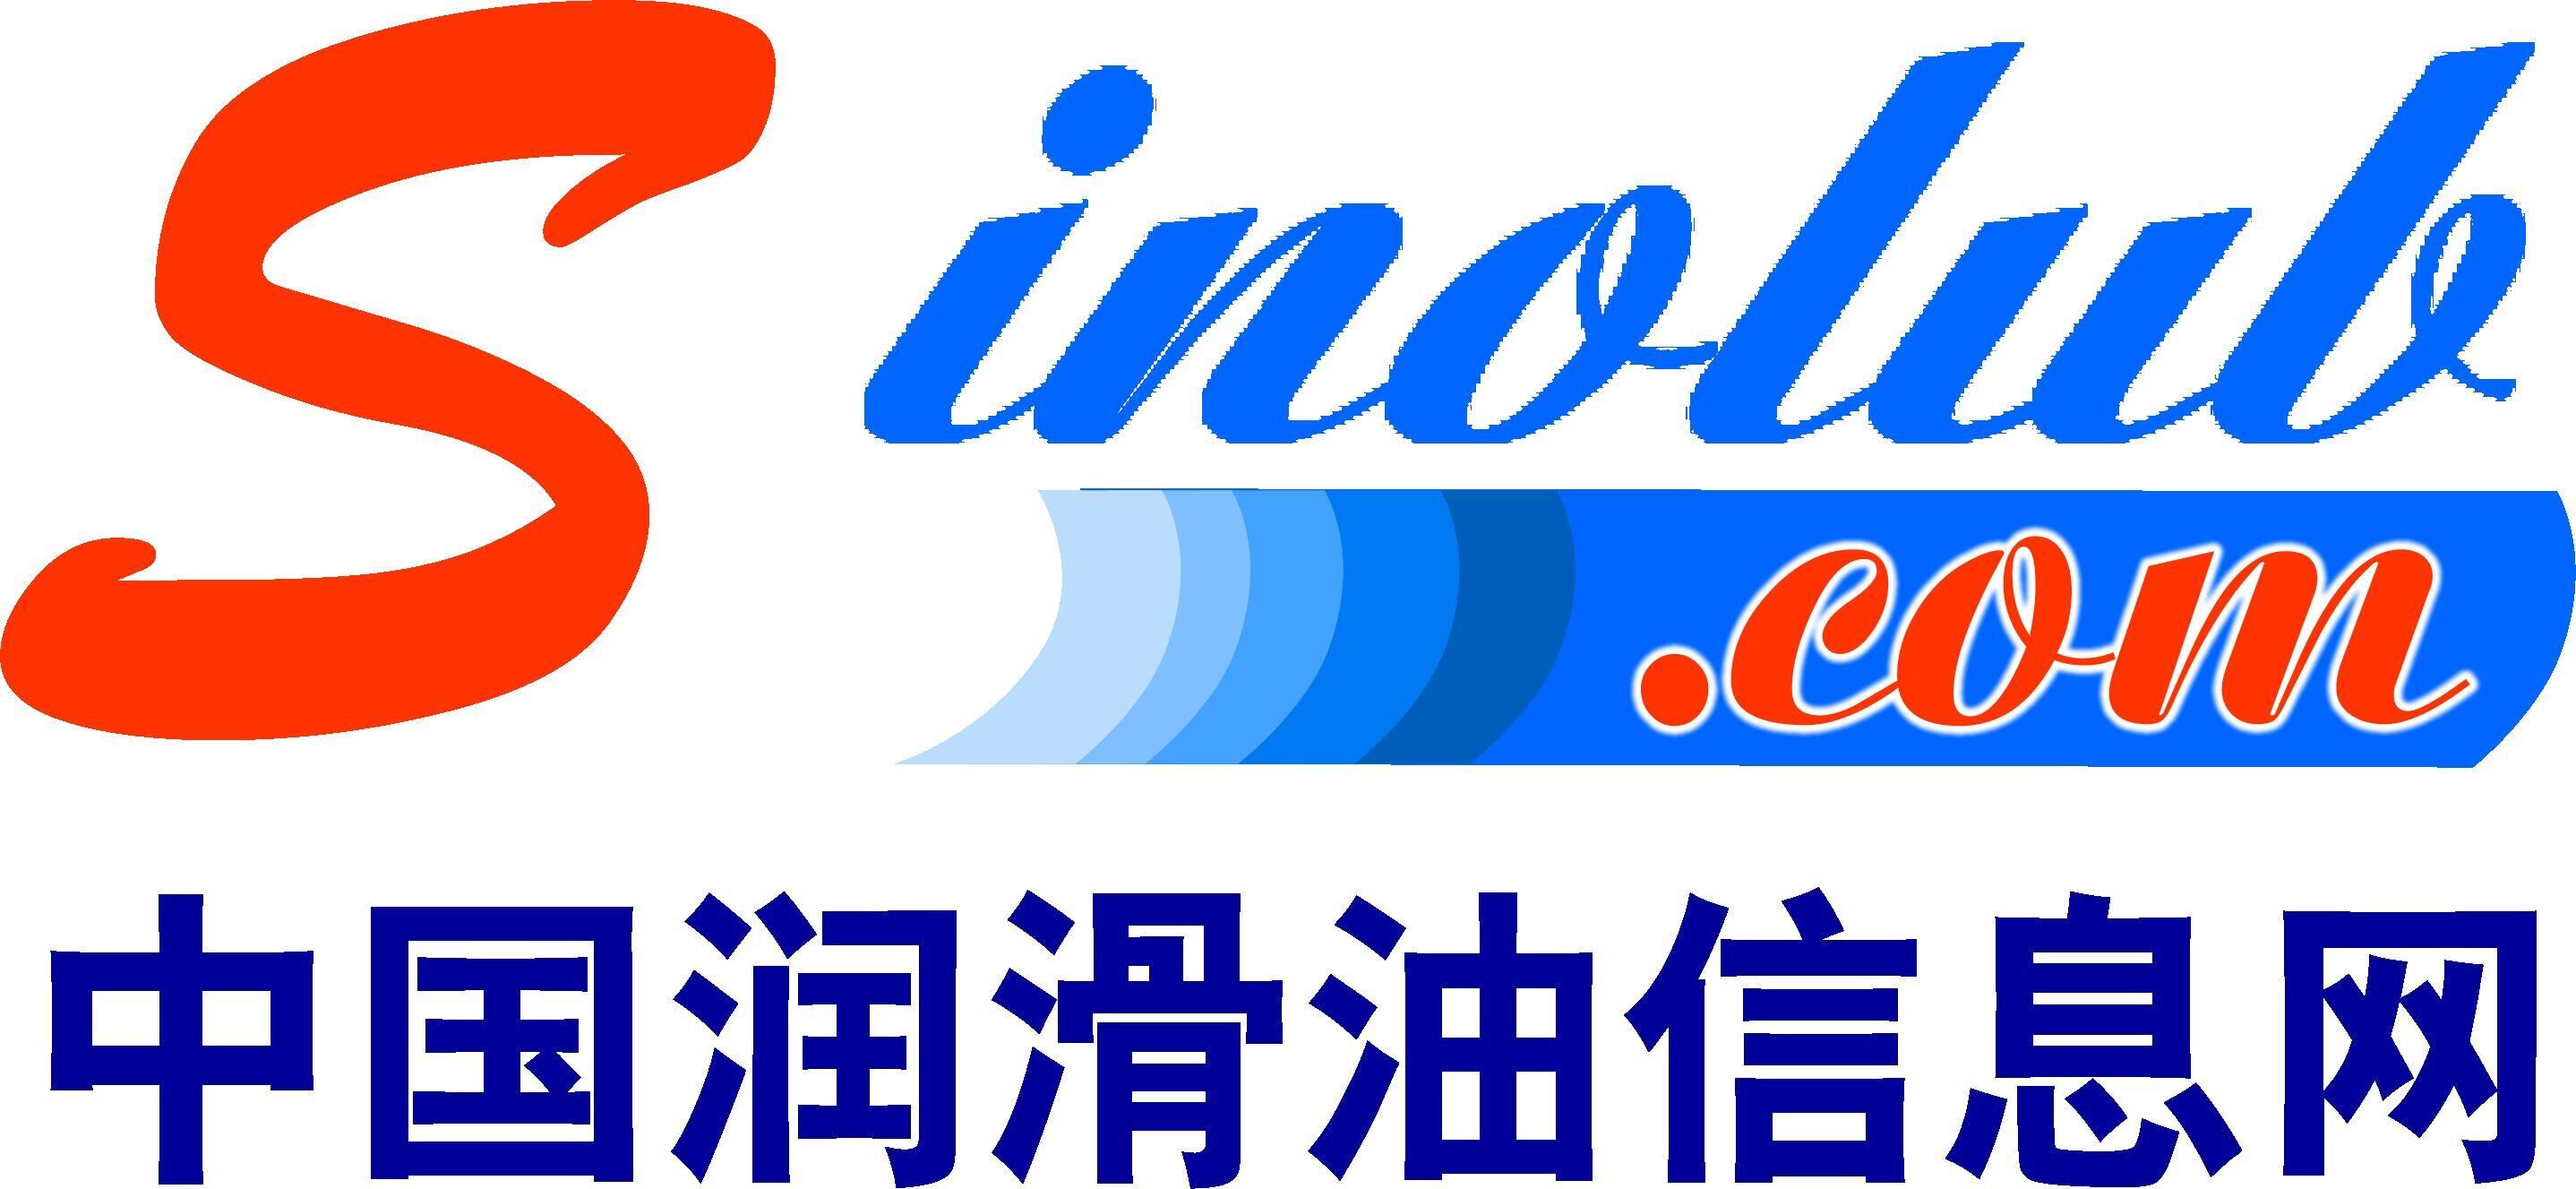 image中国润滑油信息网wwwsinolubcom